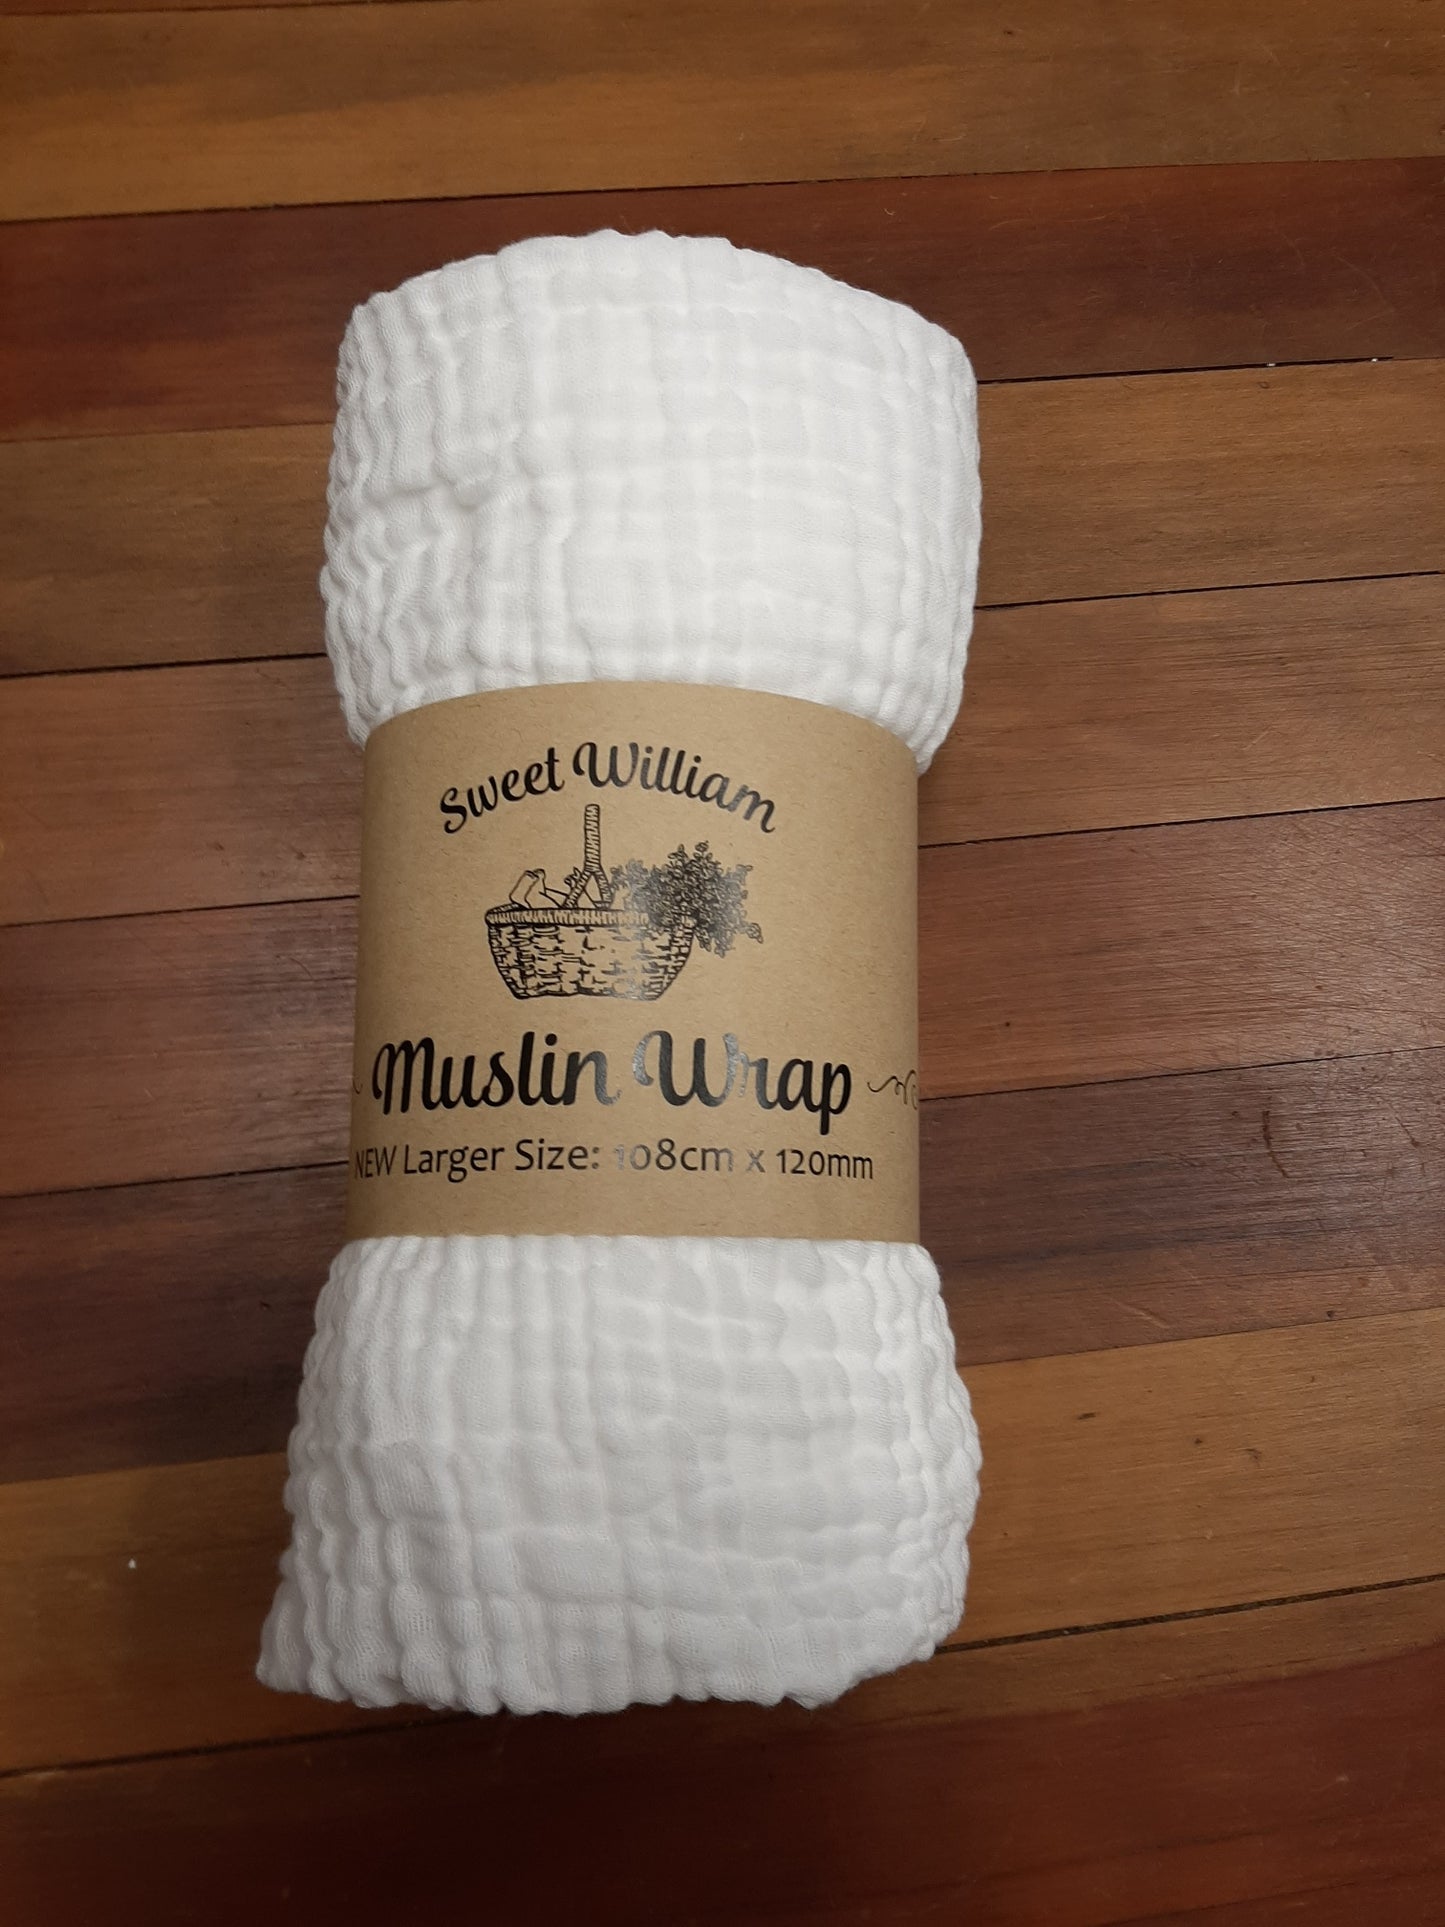 Sweet William Muslin Wrap XL